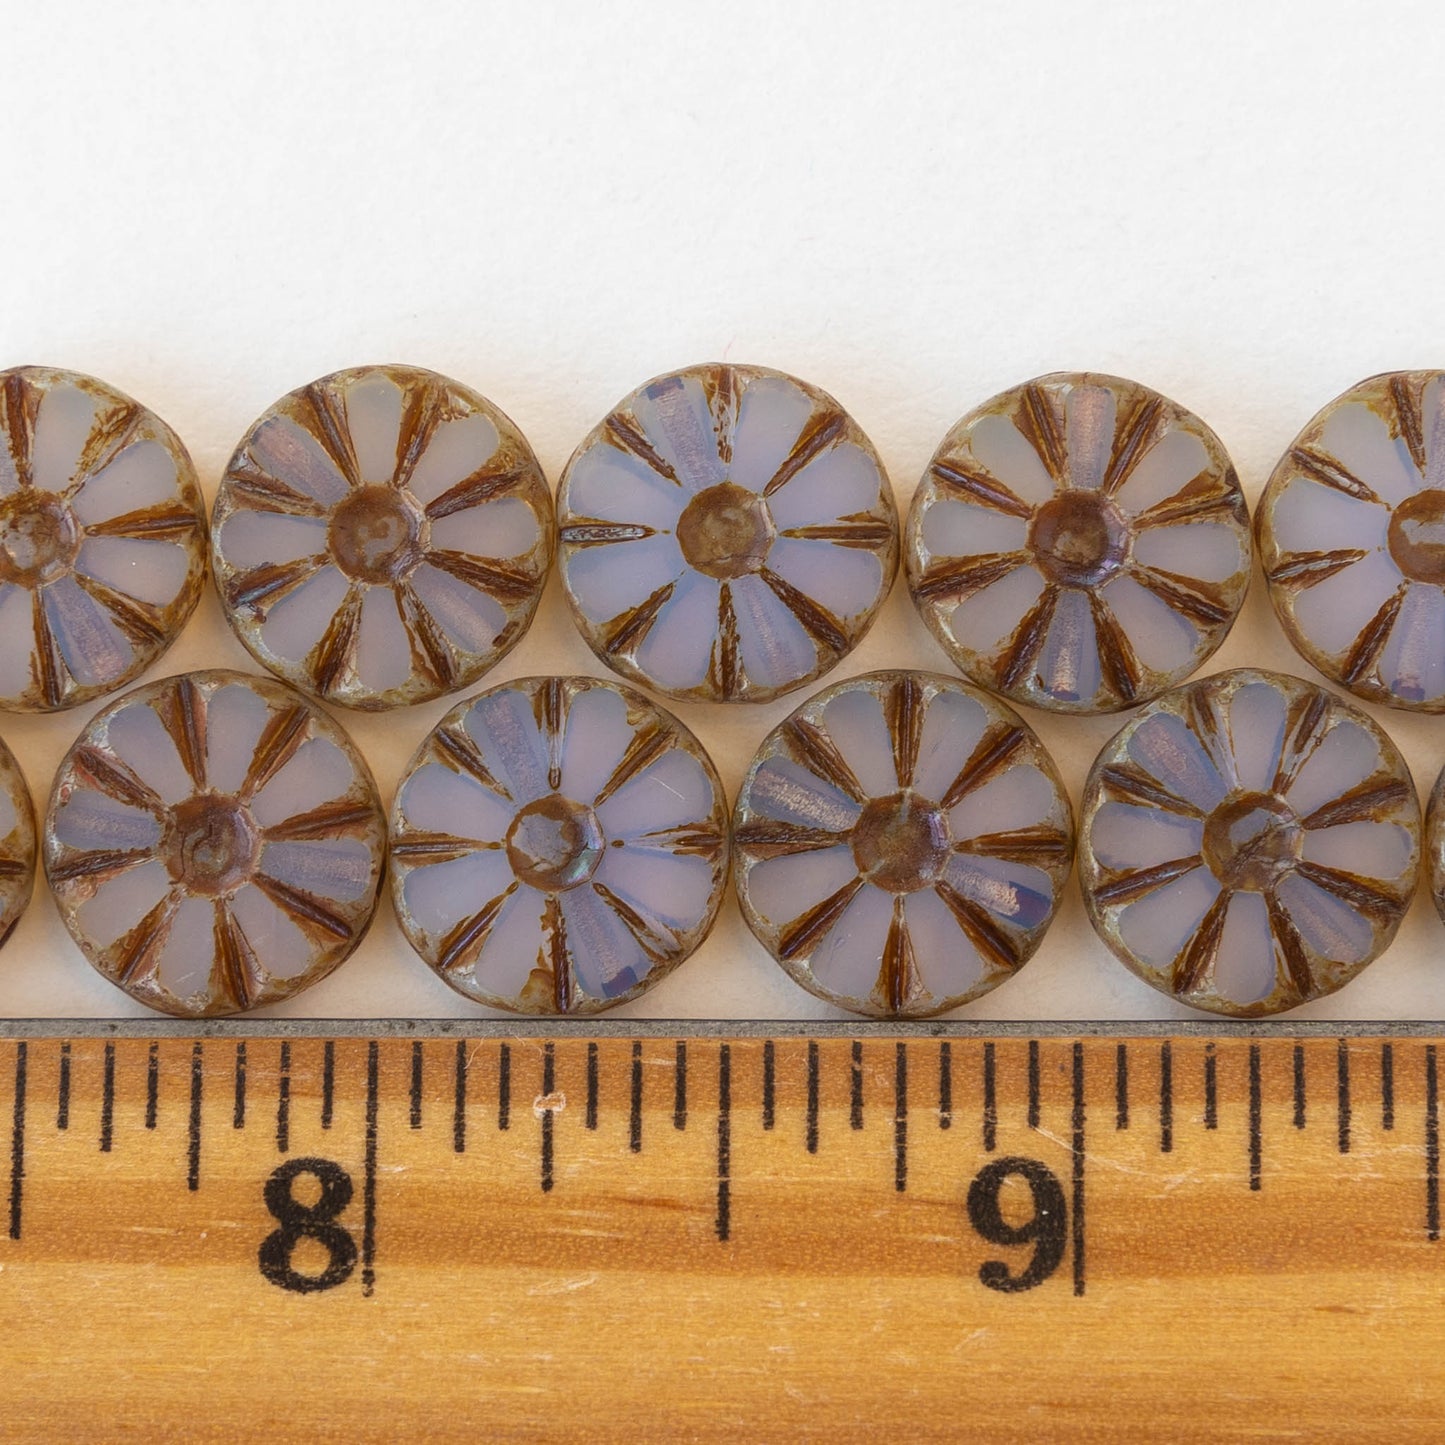 12mm Sunflower Coin Beads - Light lavender Opaline - 10 or 30 Beads